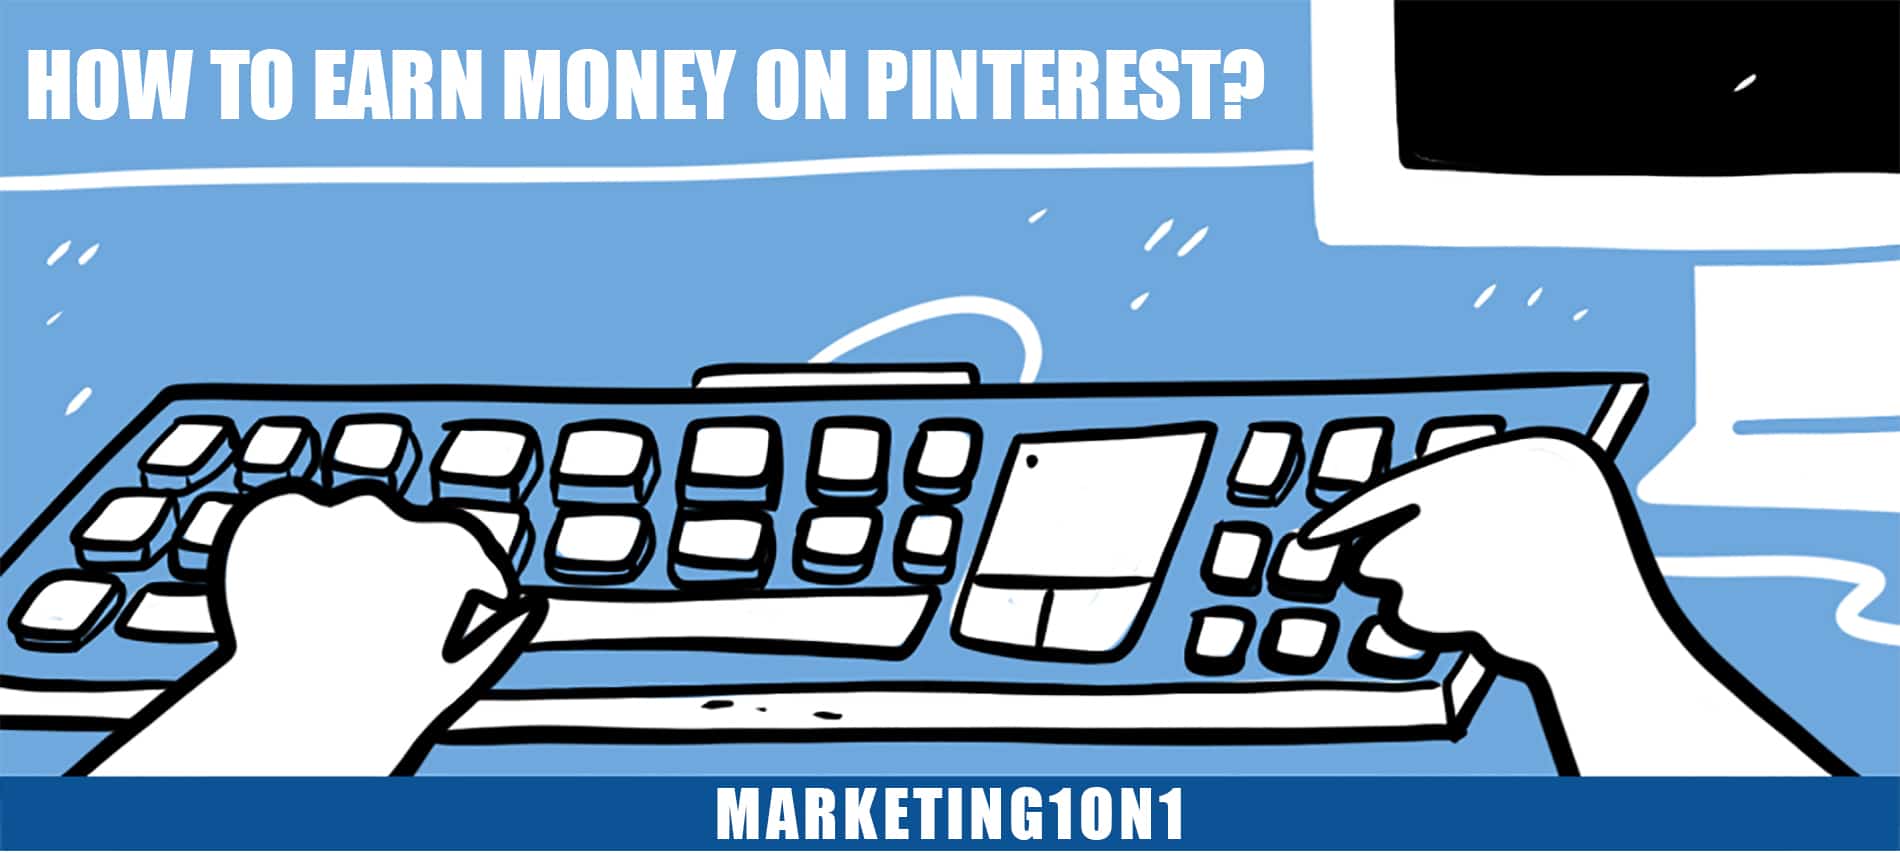 How to earn money on Pinterest?